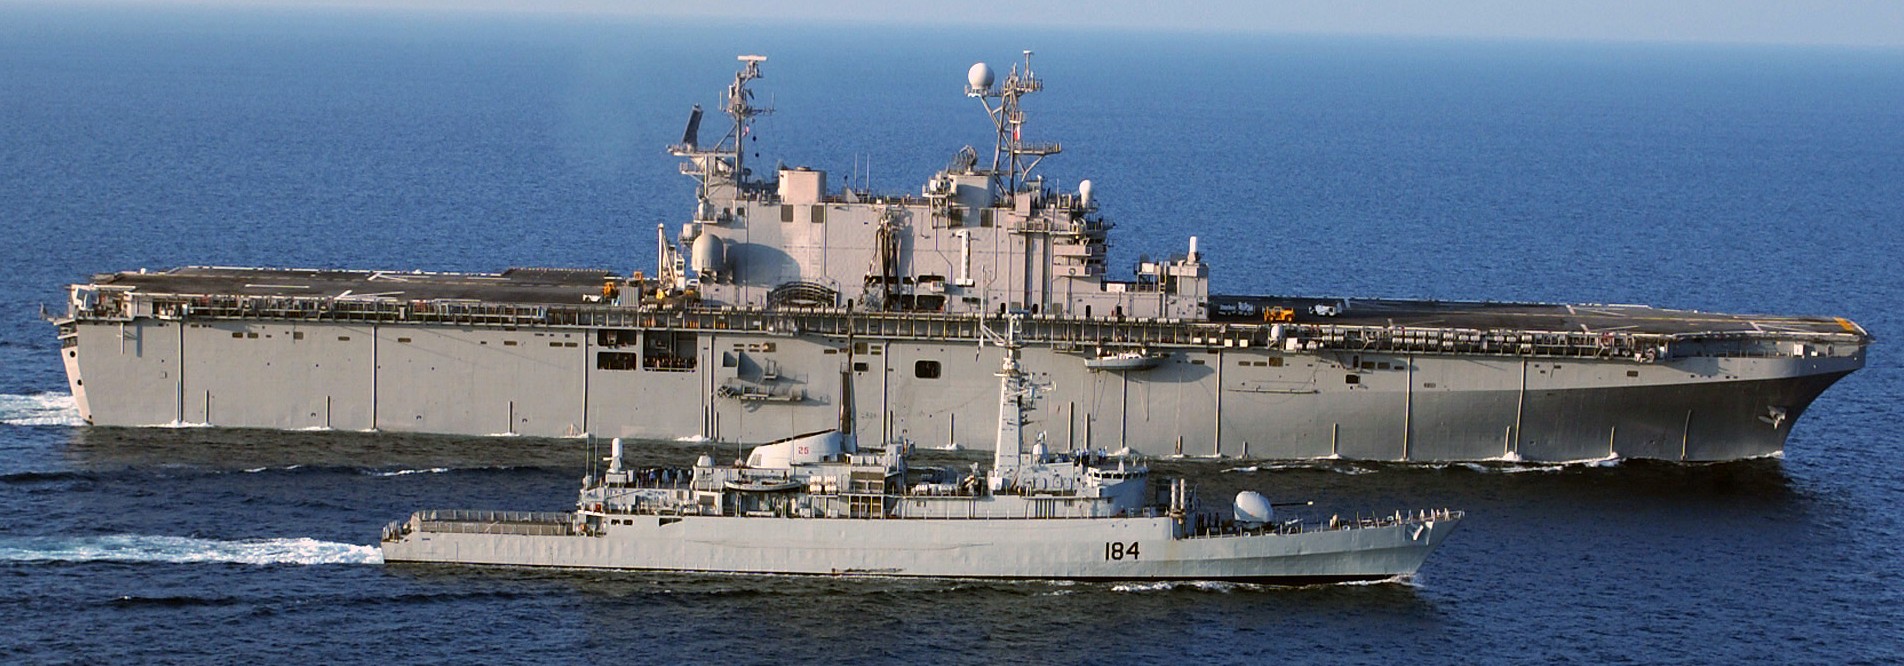 lha-1 uss tarawa amphibious assault ship us navy 13th meu soc marines hmm-163 rein persian gulf 33